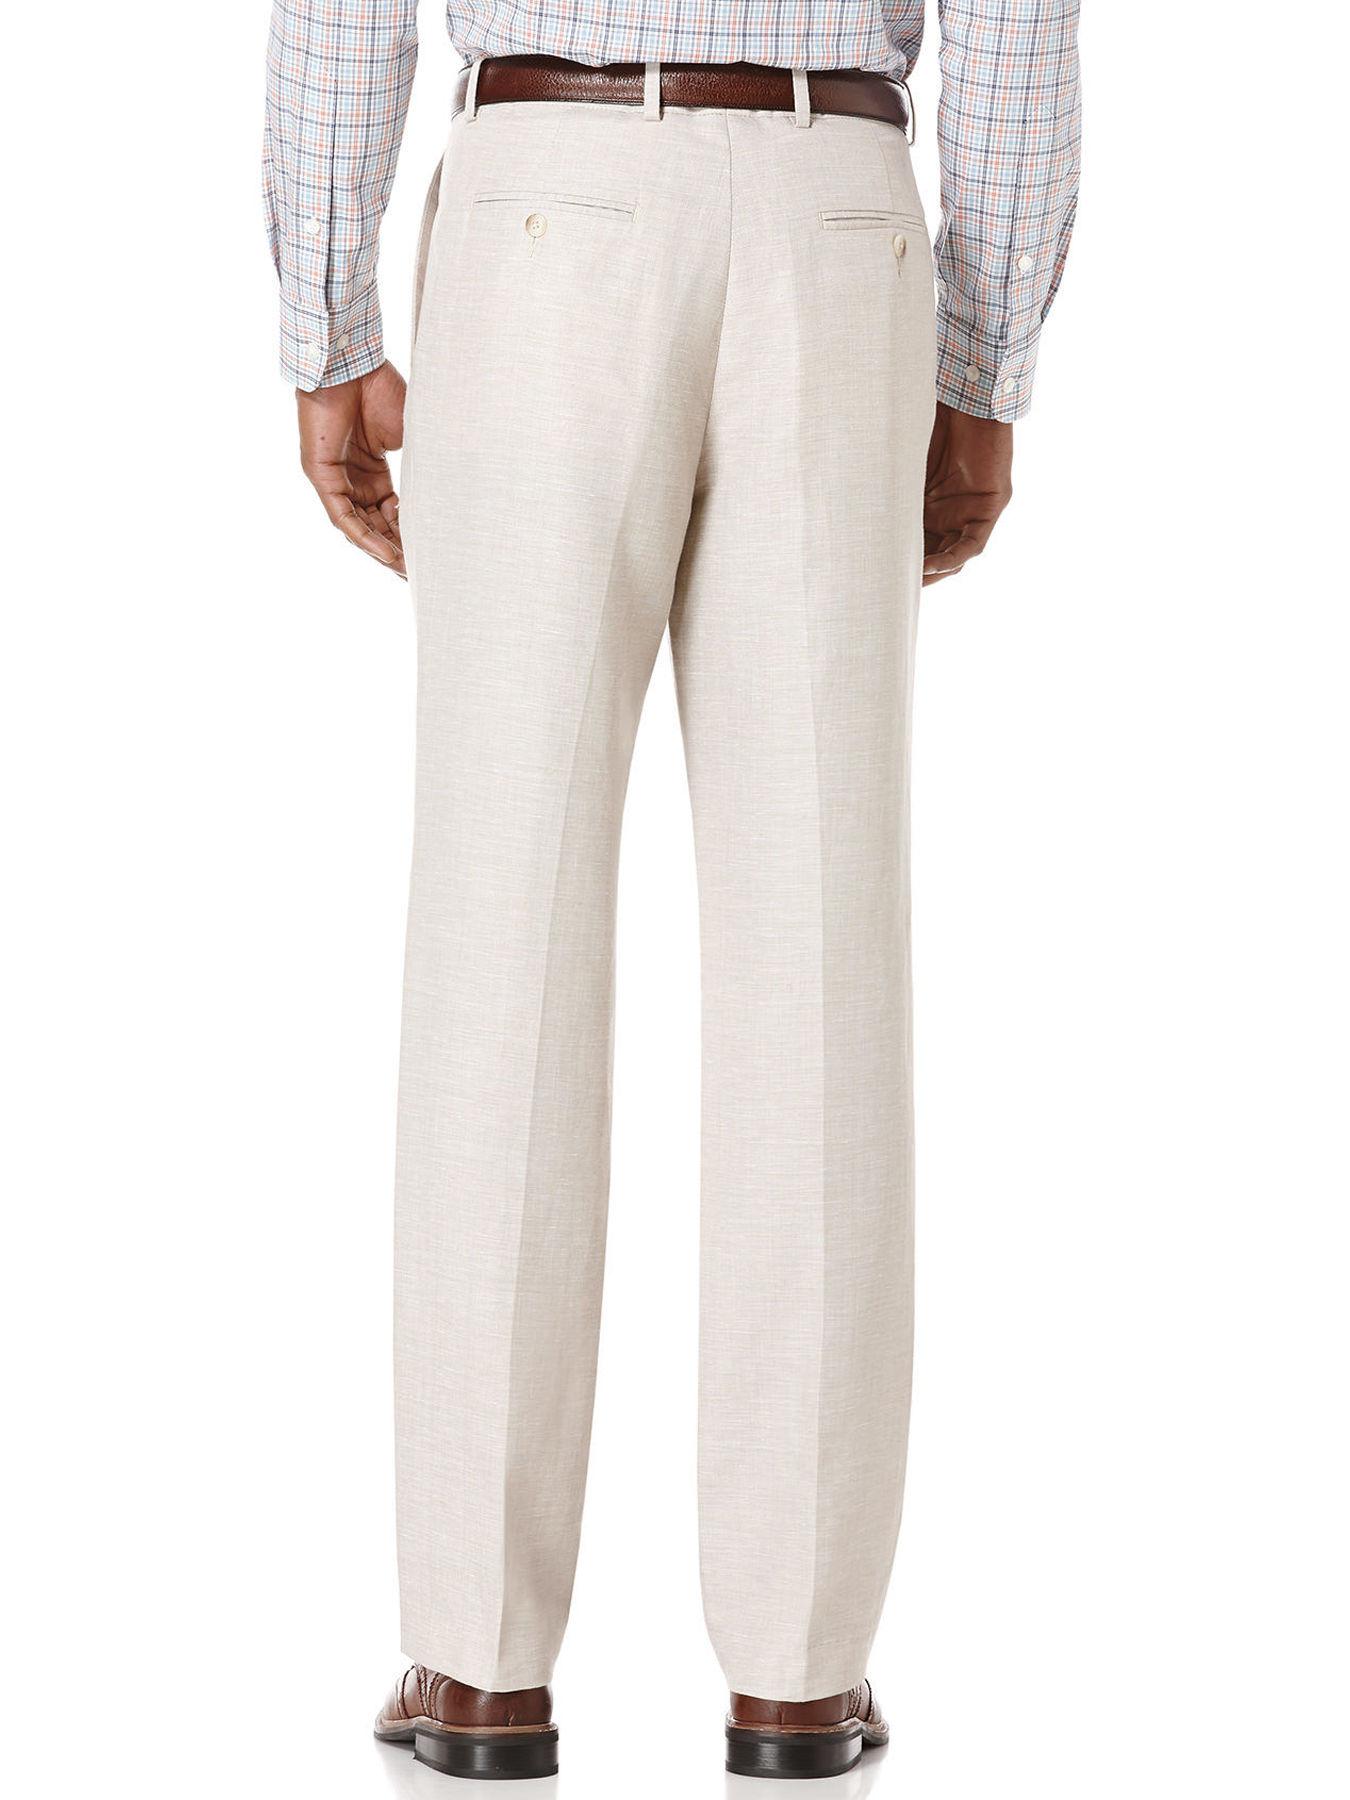 Lyst - Perry Ellis Big & Tall Linen Cotton Herringbone Suit Pant in ...